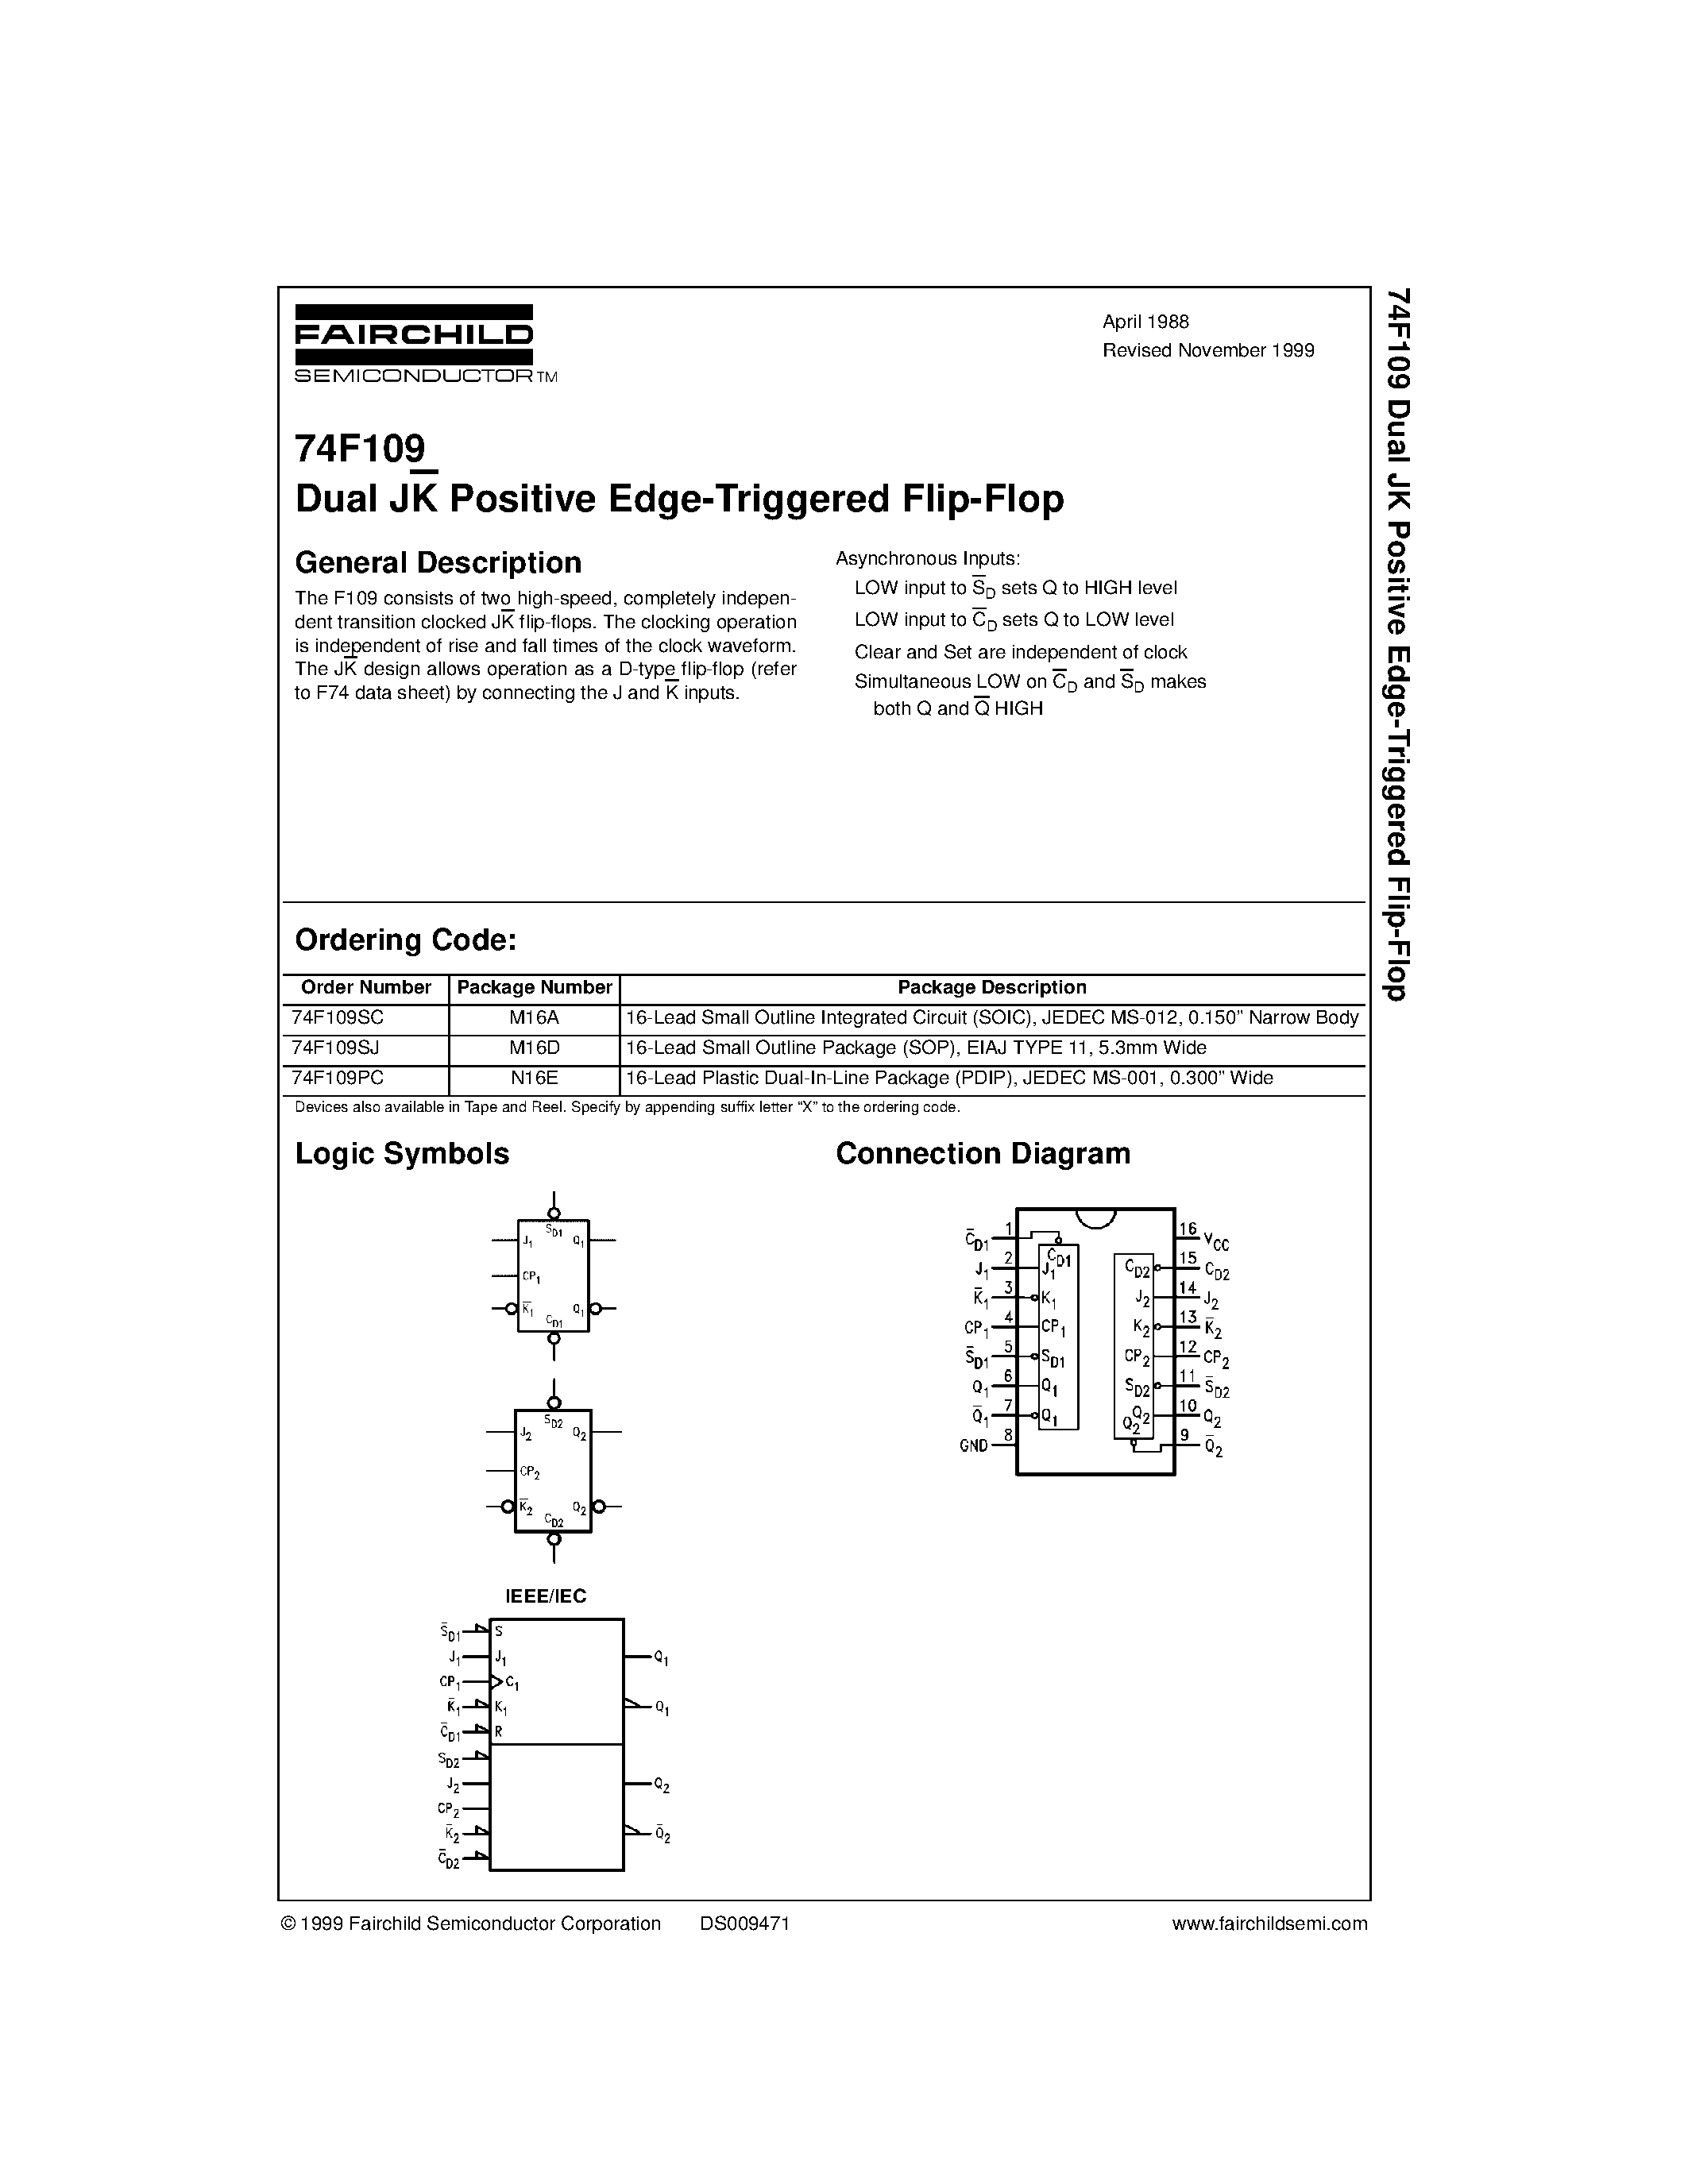 Datasheet 74F109SJ - Dual JK Positive Edge-Triggered Flip-Flop page 1